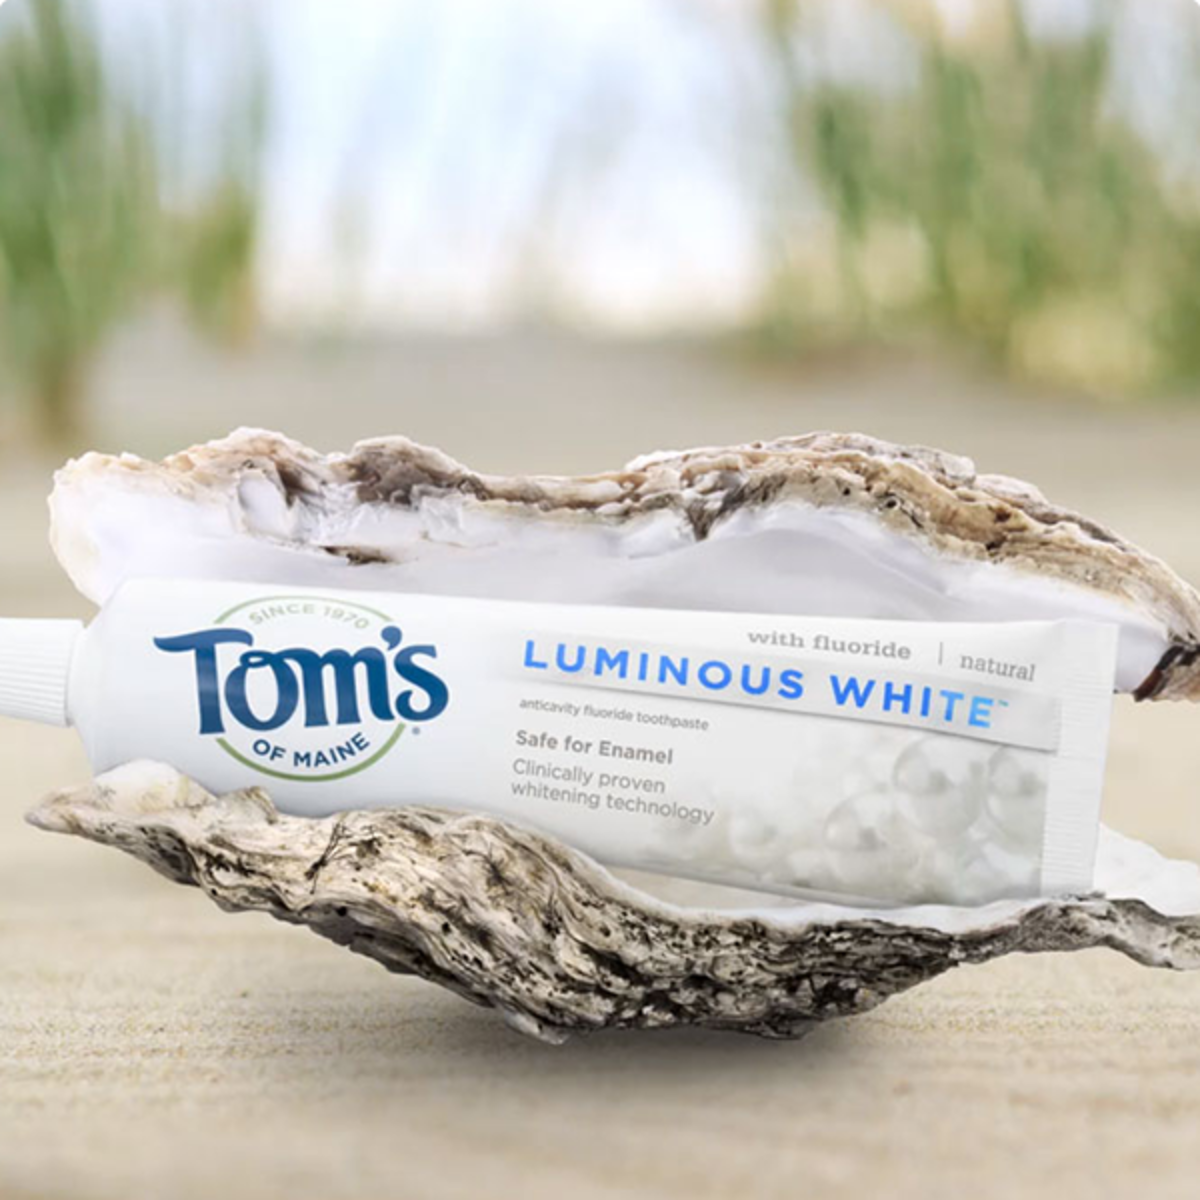 Tom's of Maine Luminous White Toothpaste